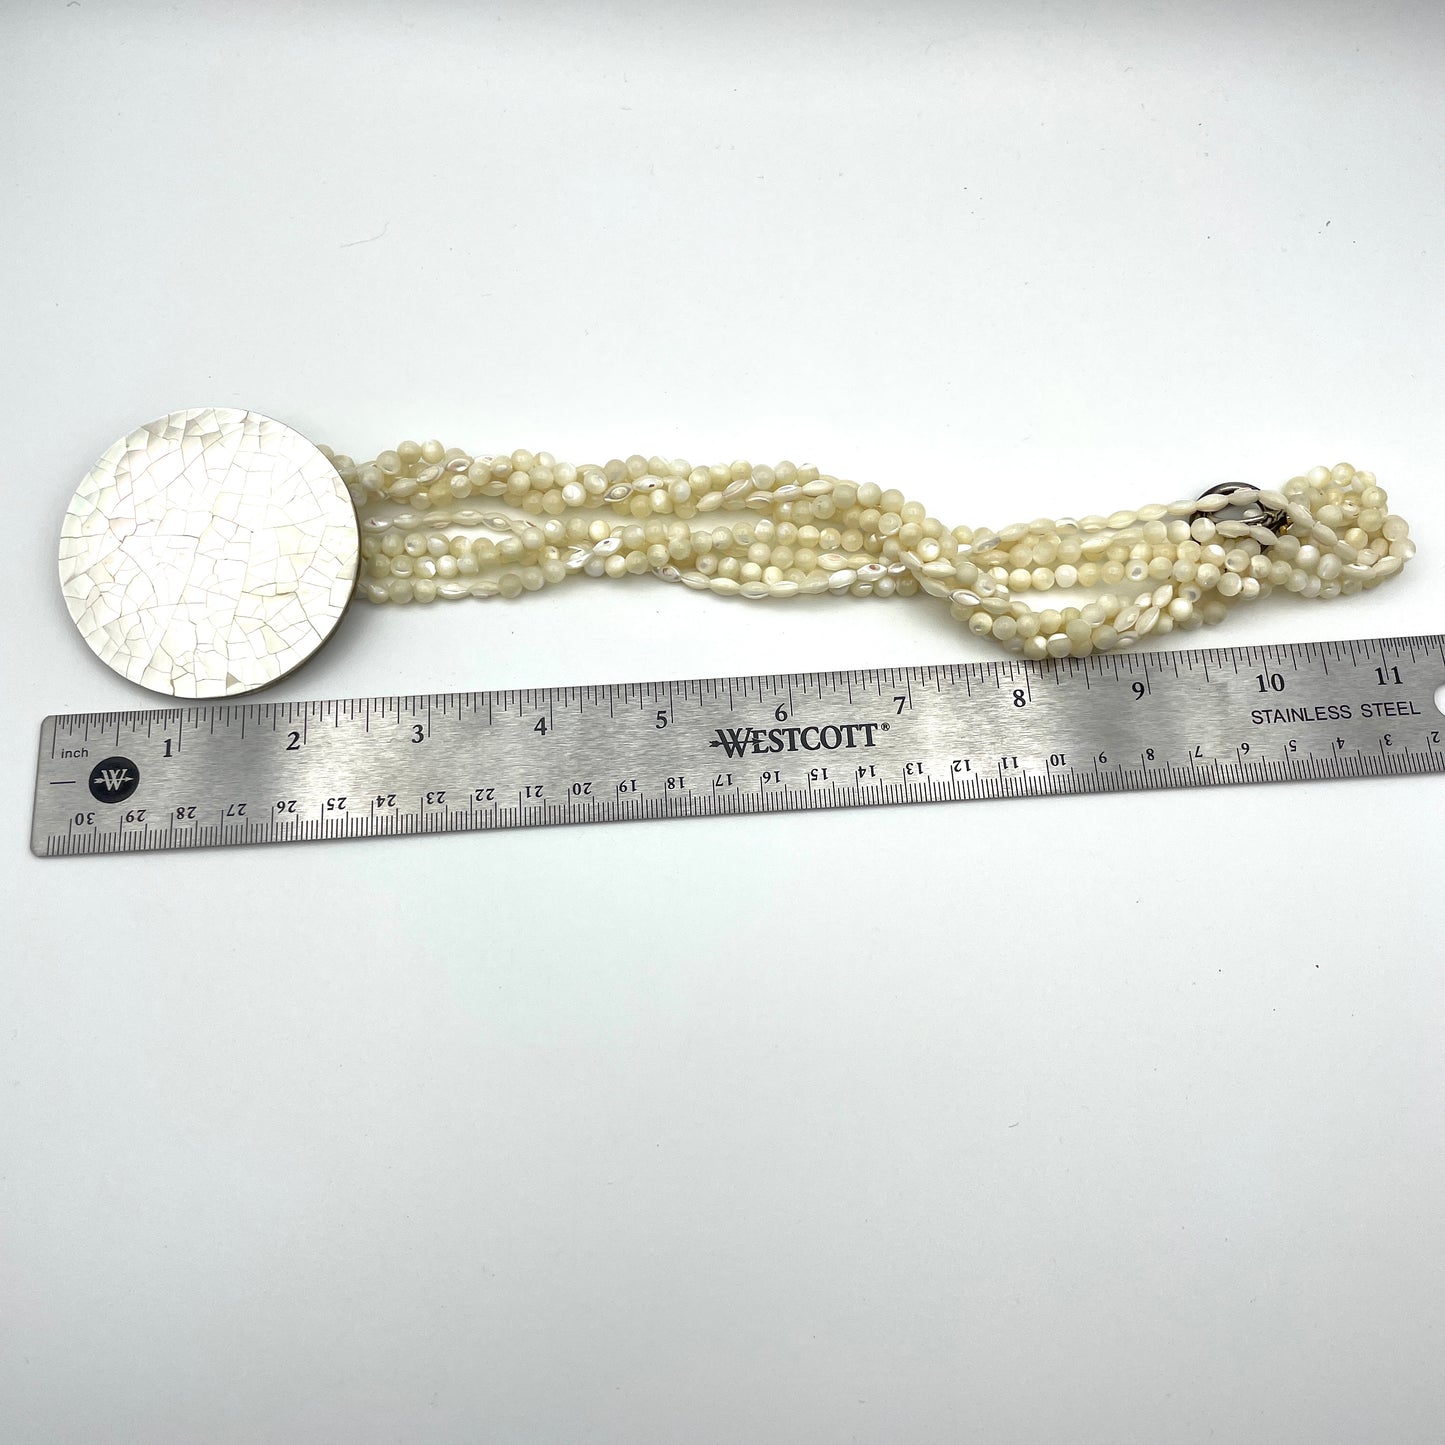 Vintage Abalone Pendant & White Statement Necklace